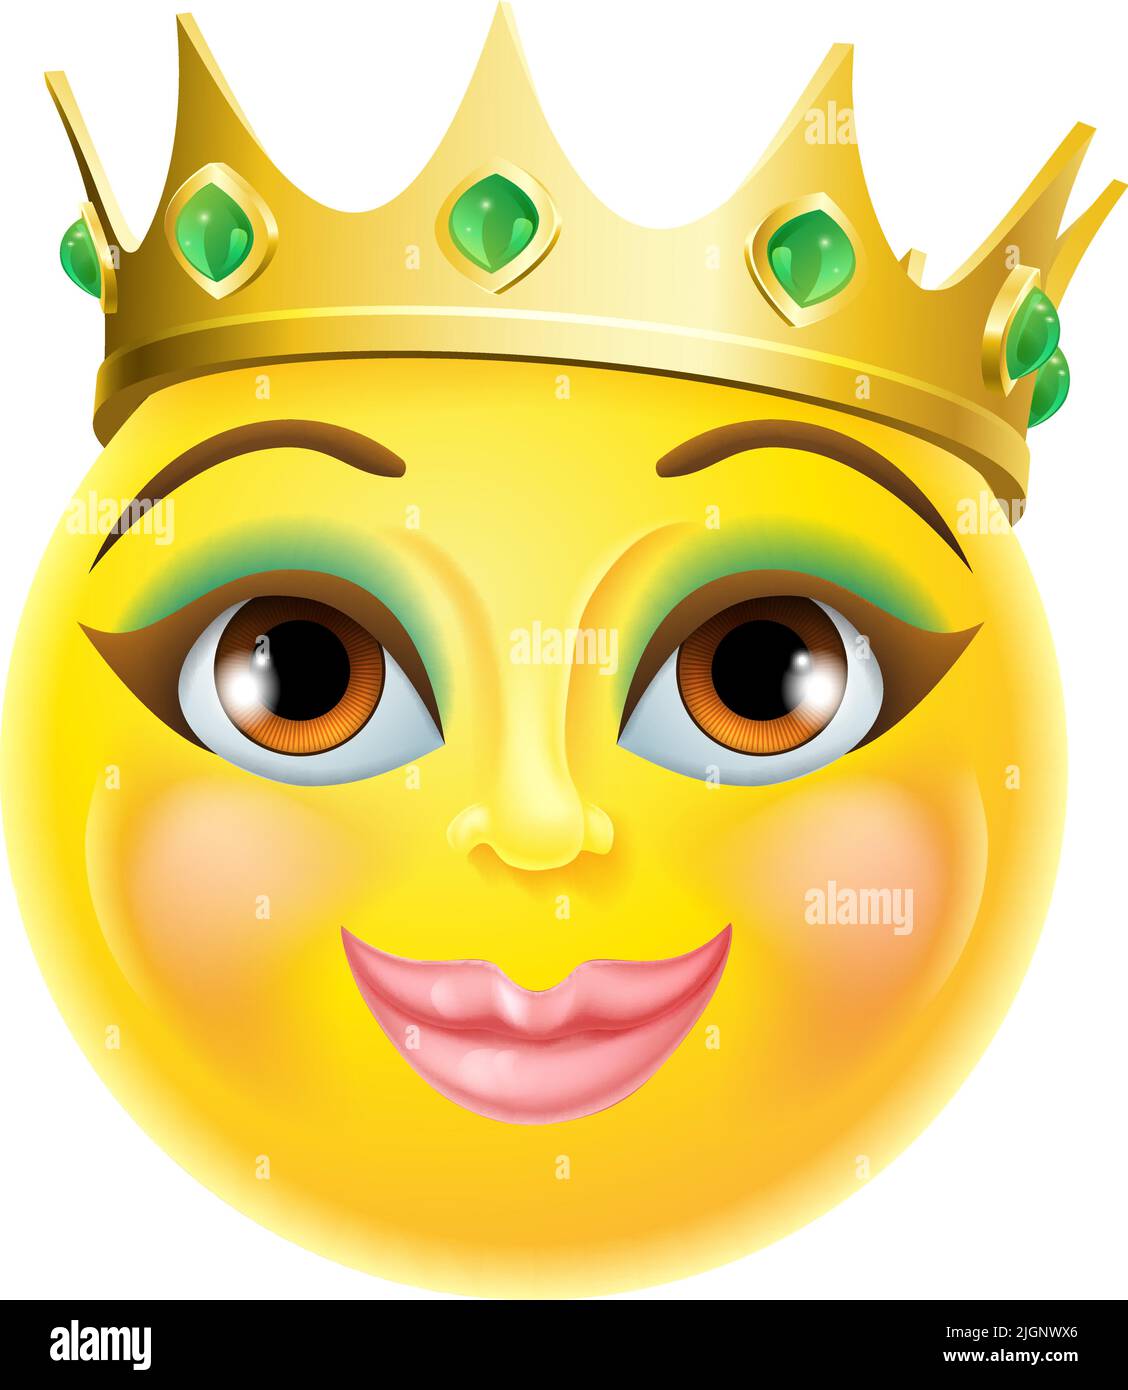 Face de la reine Princess Emoticon Gold Crown Cartoon Illustration de Vecteur